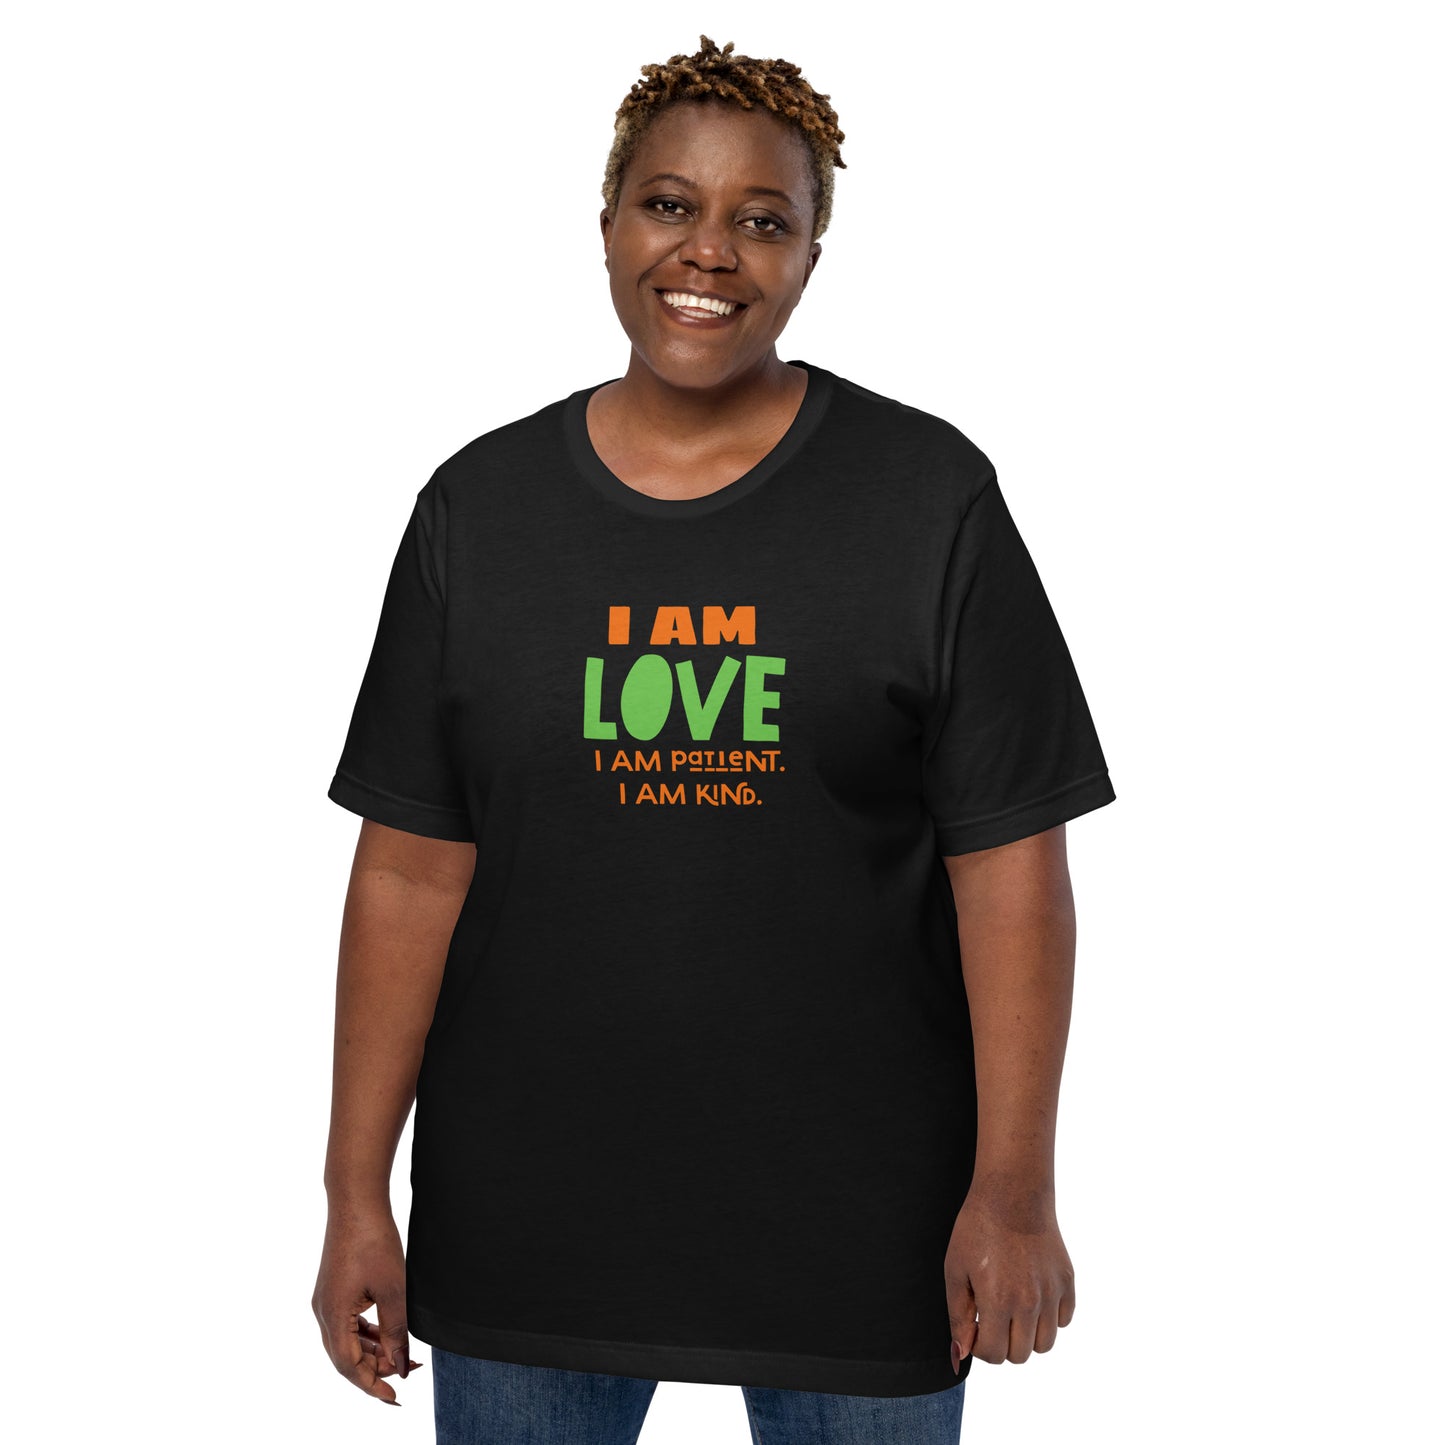 I AM Love Unisex T-Shirt